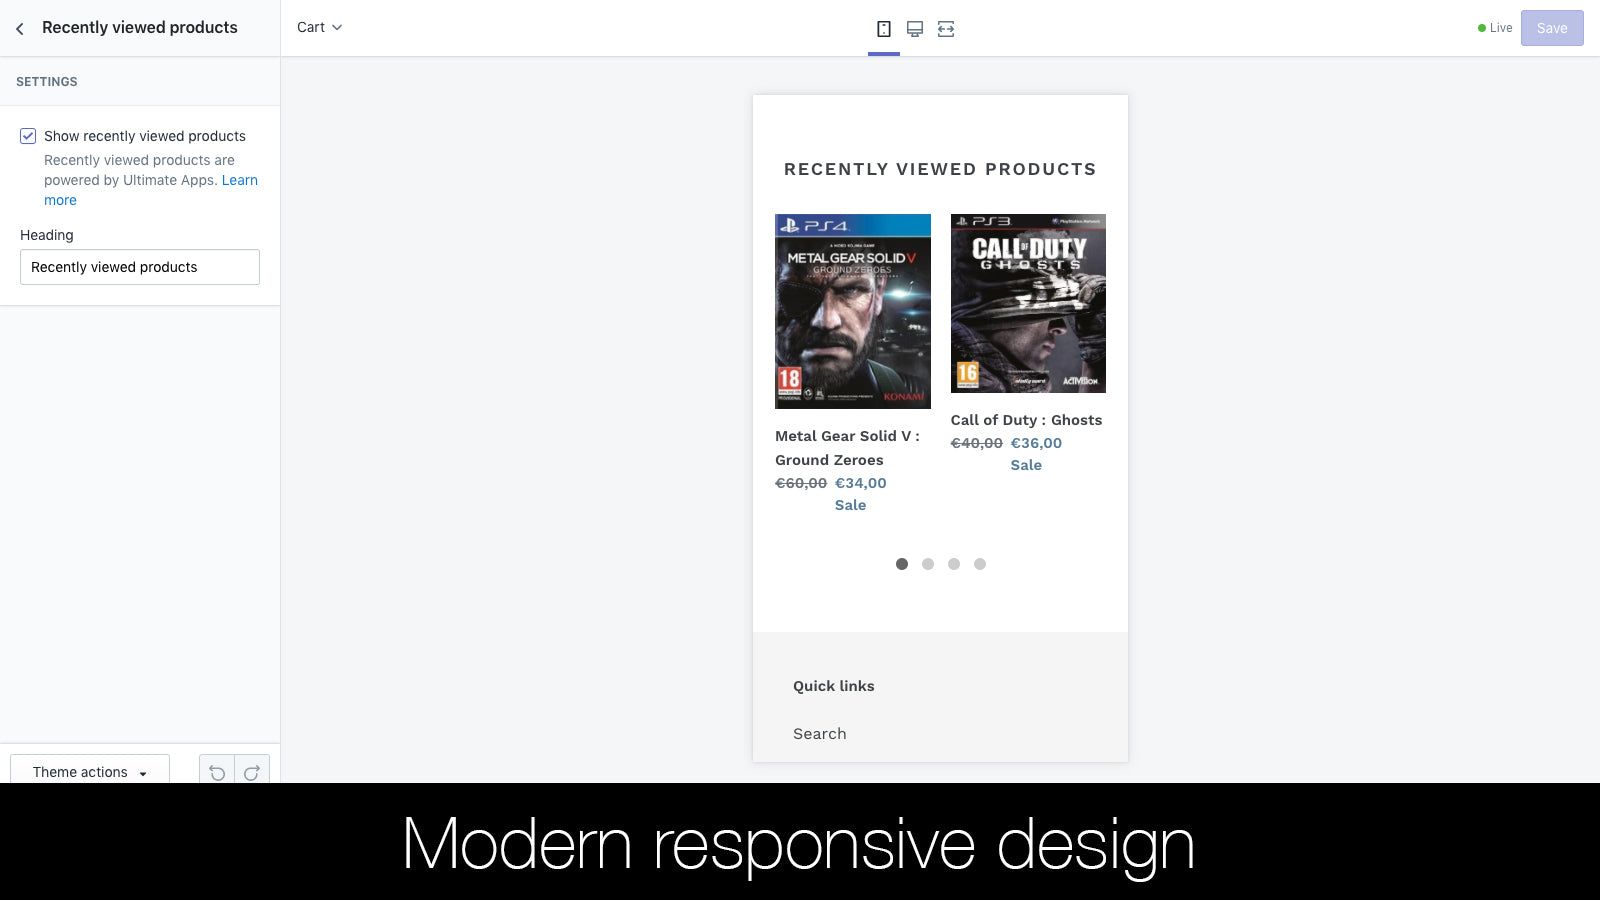 Modern responsive design